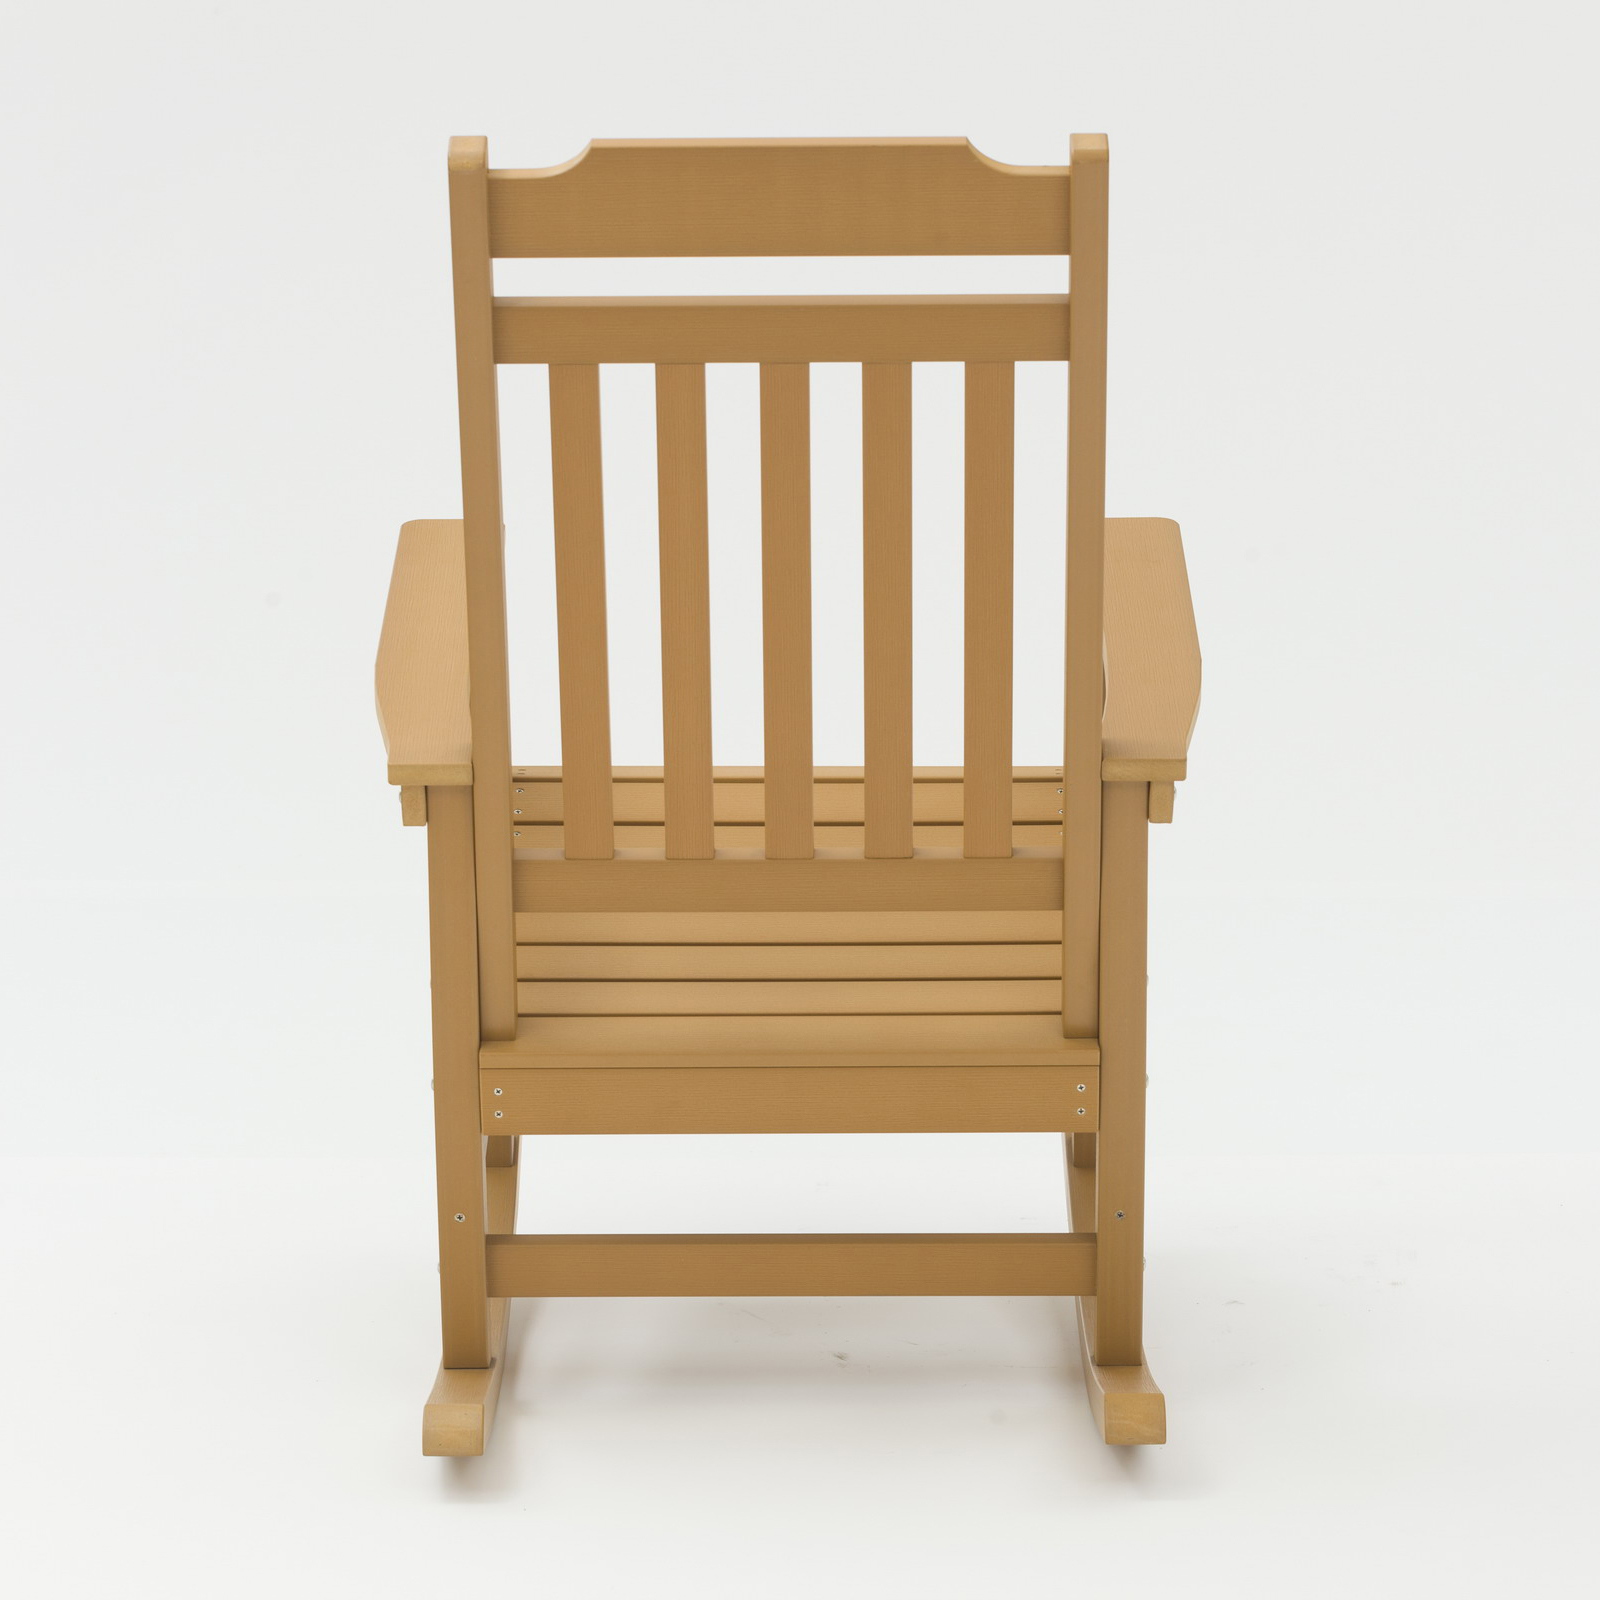 Uplion Outdoor Waterproof Chair Patio Plastic Wood Rocking Chair Rocking Adirondack Chair